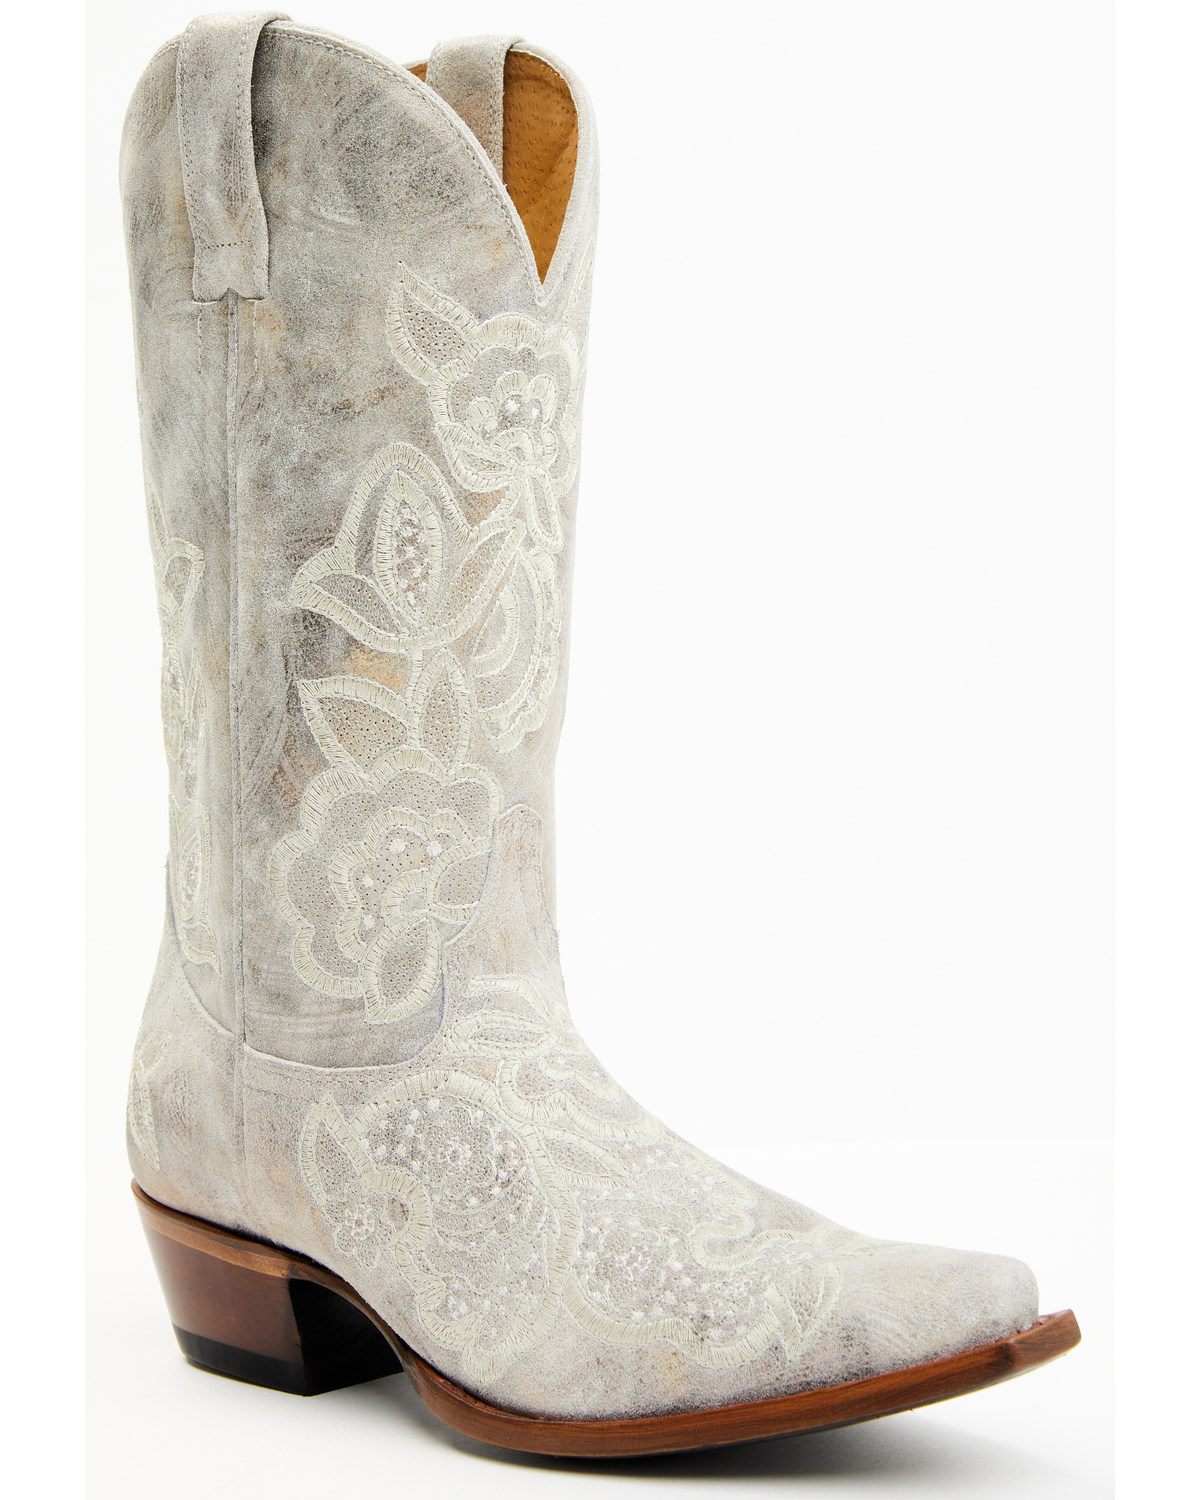 Shyanne Women's Sienna Metalico Western Boots - Snip Toe